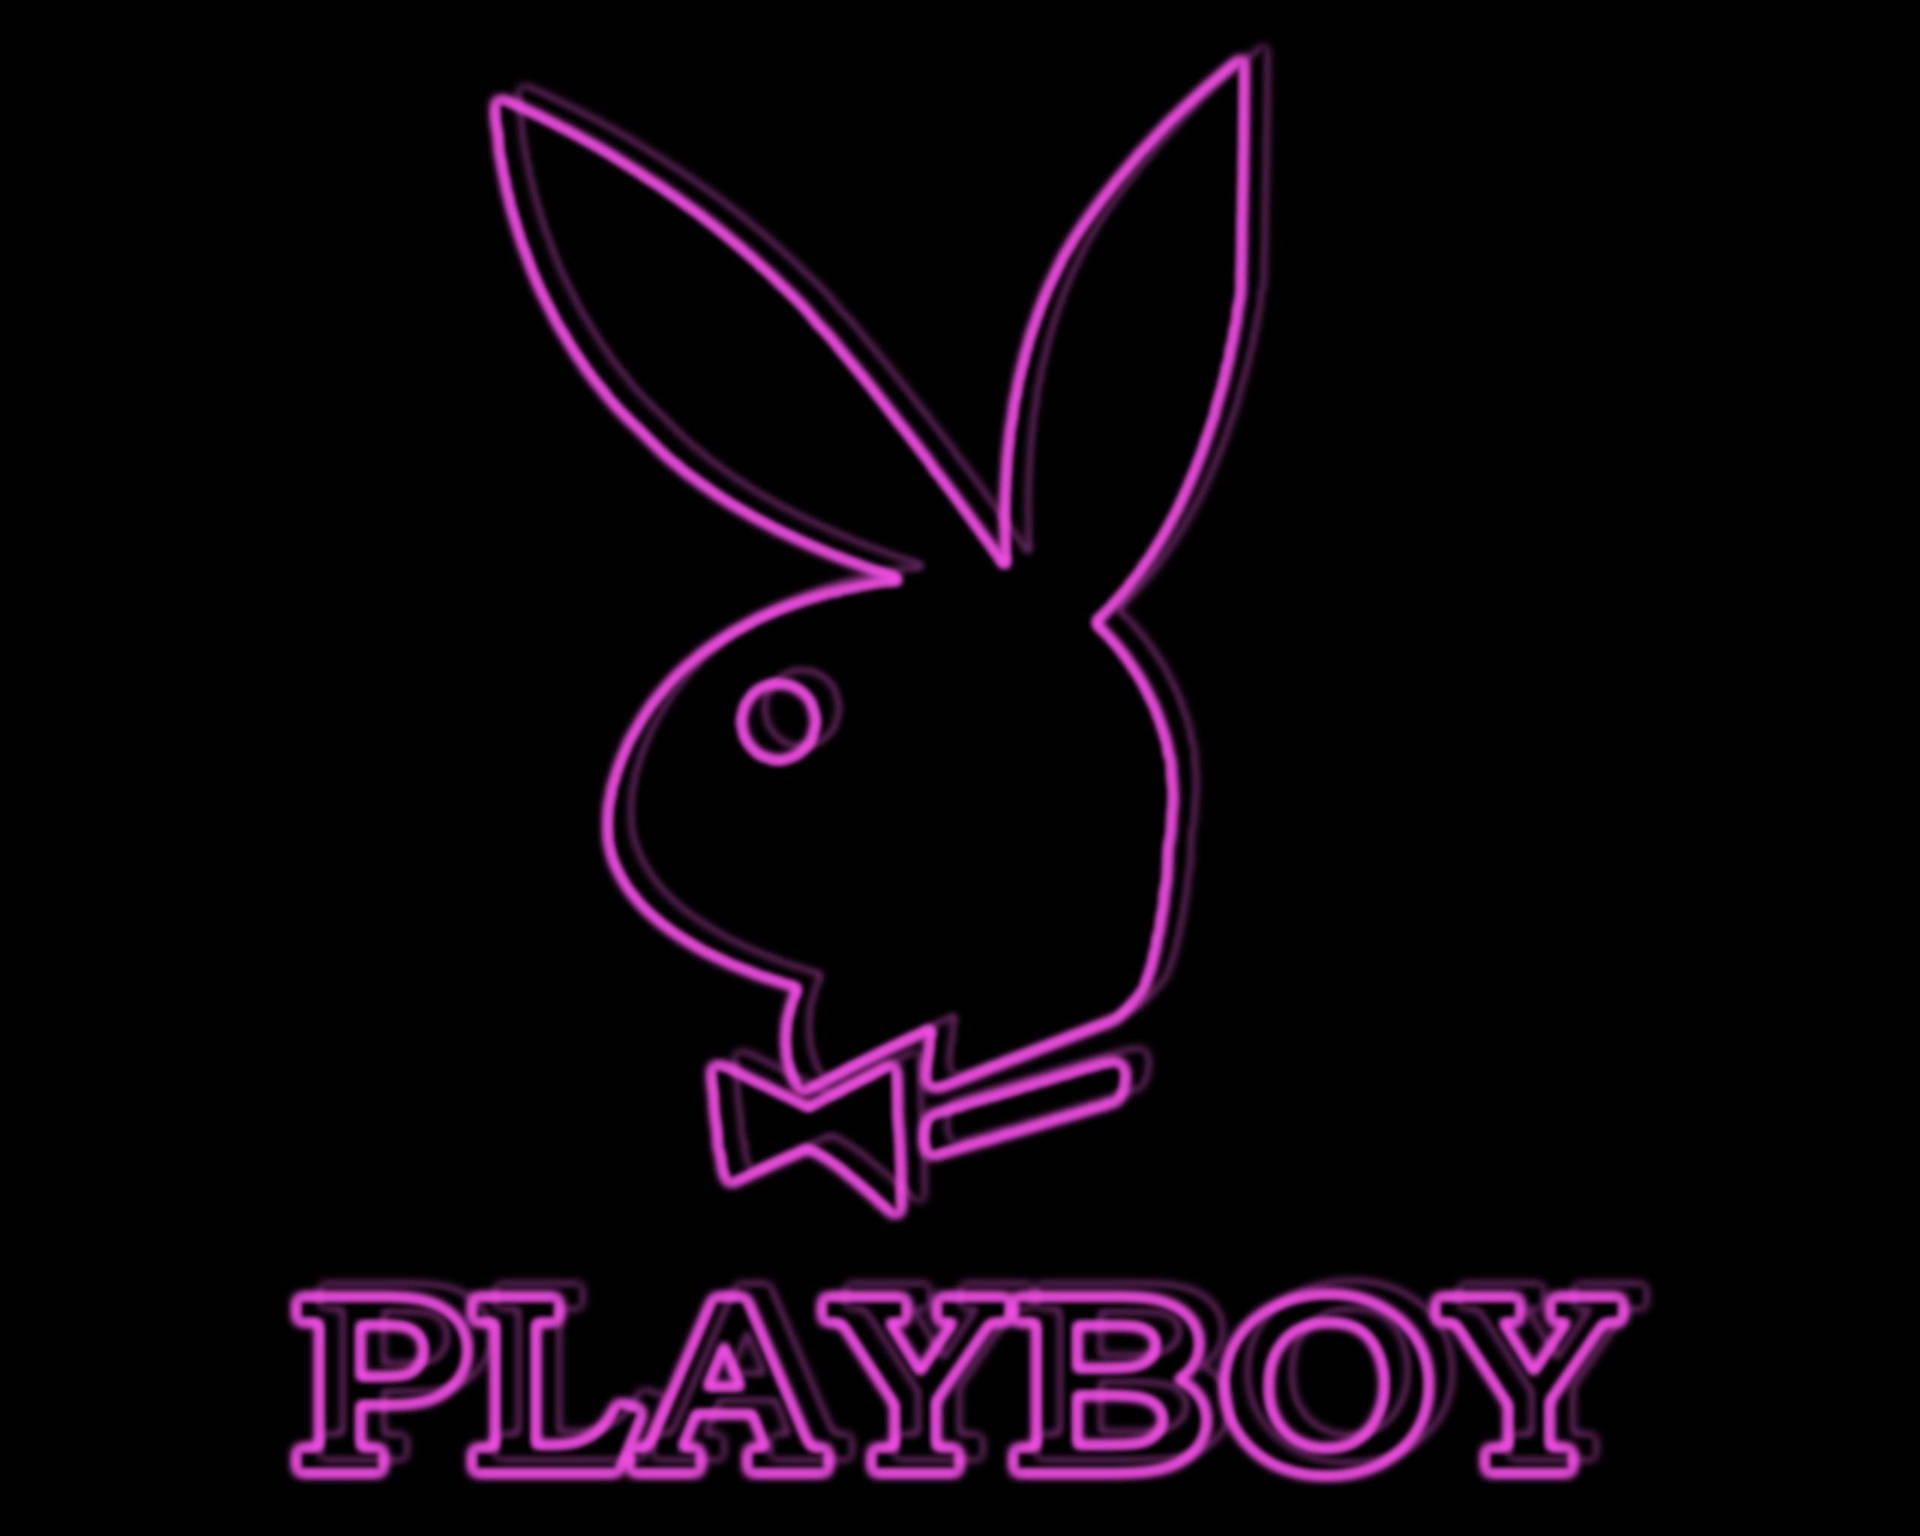 Playboy Neon Purple Wallpaper